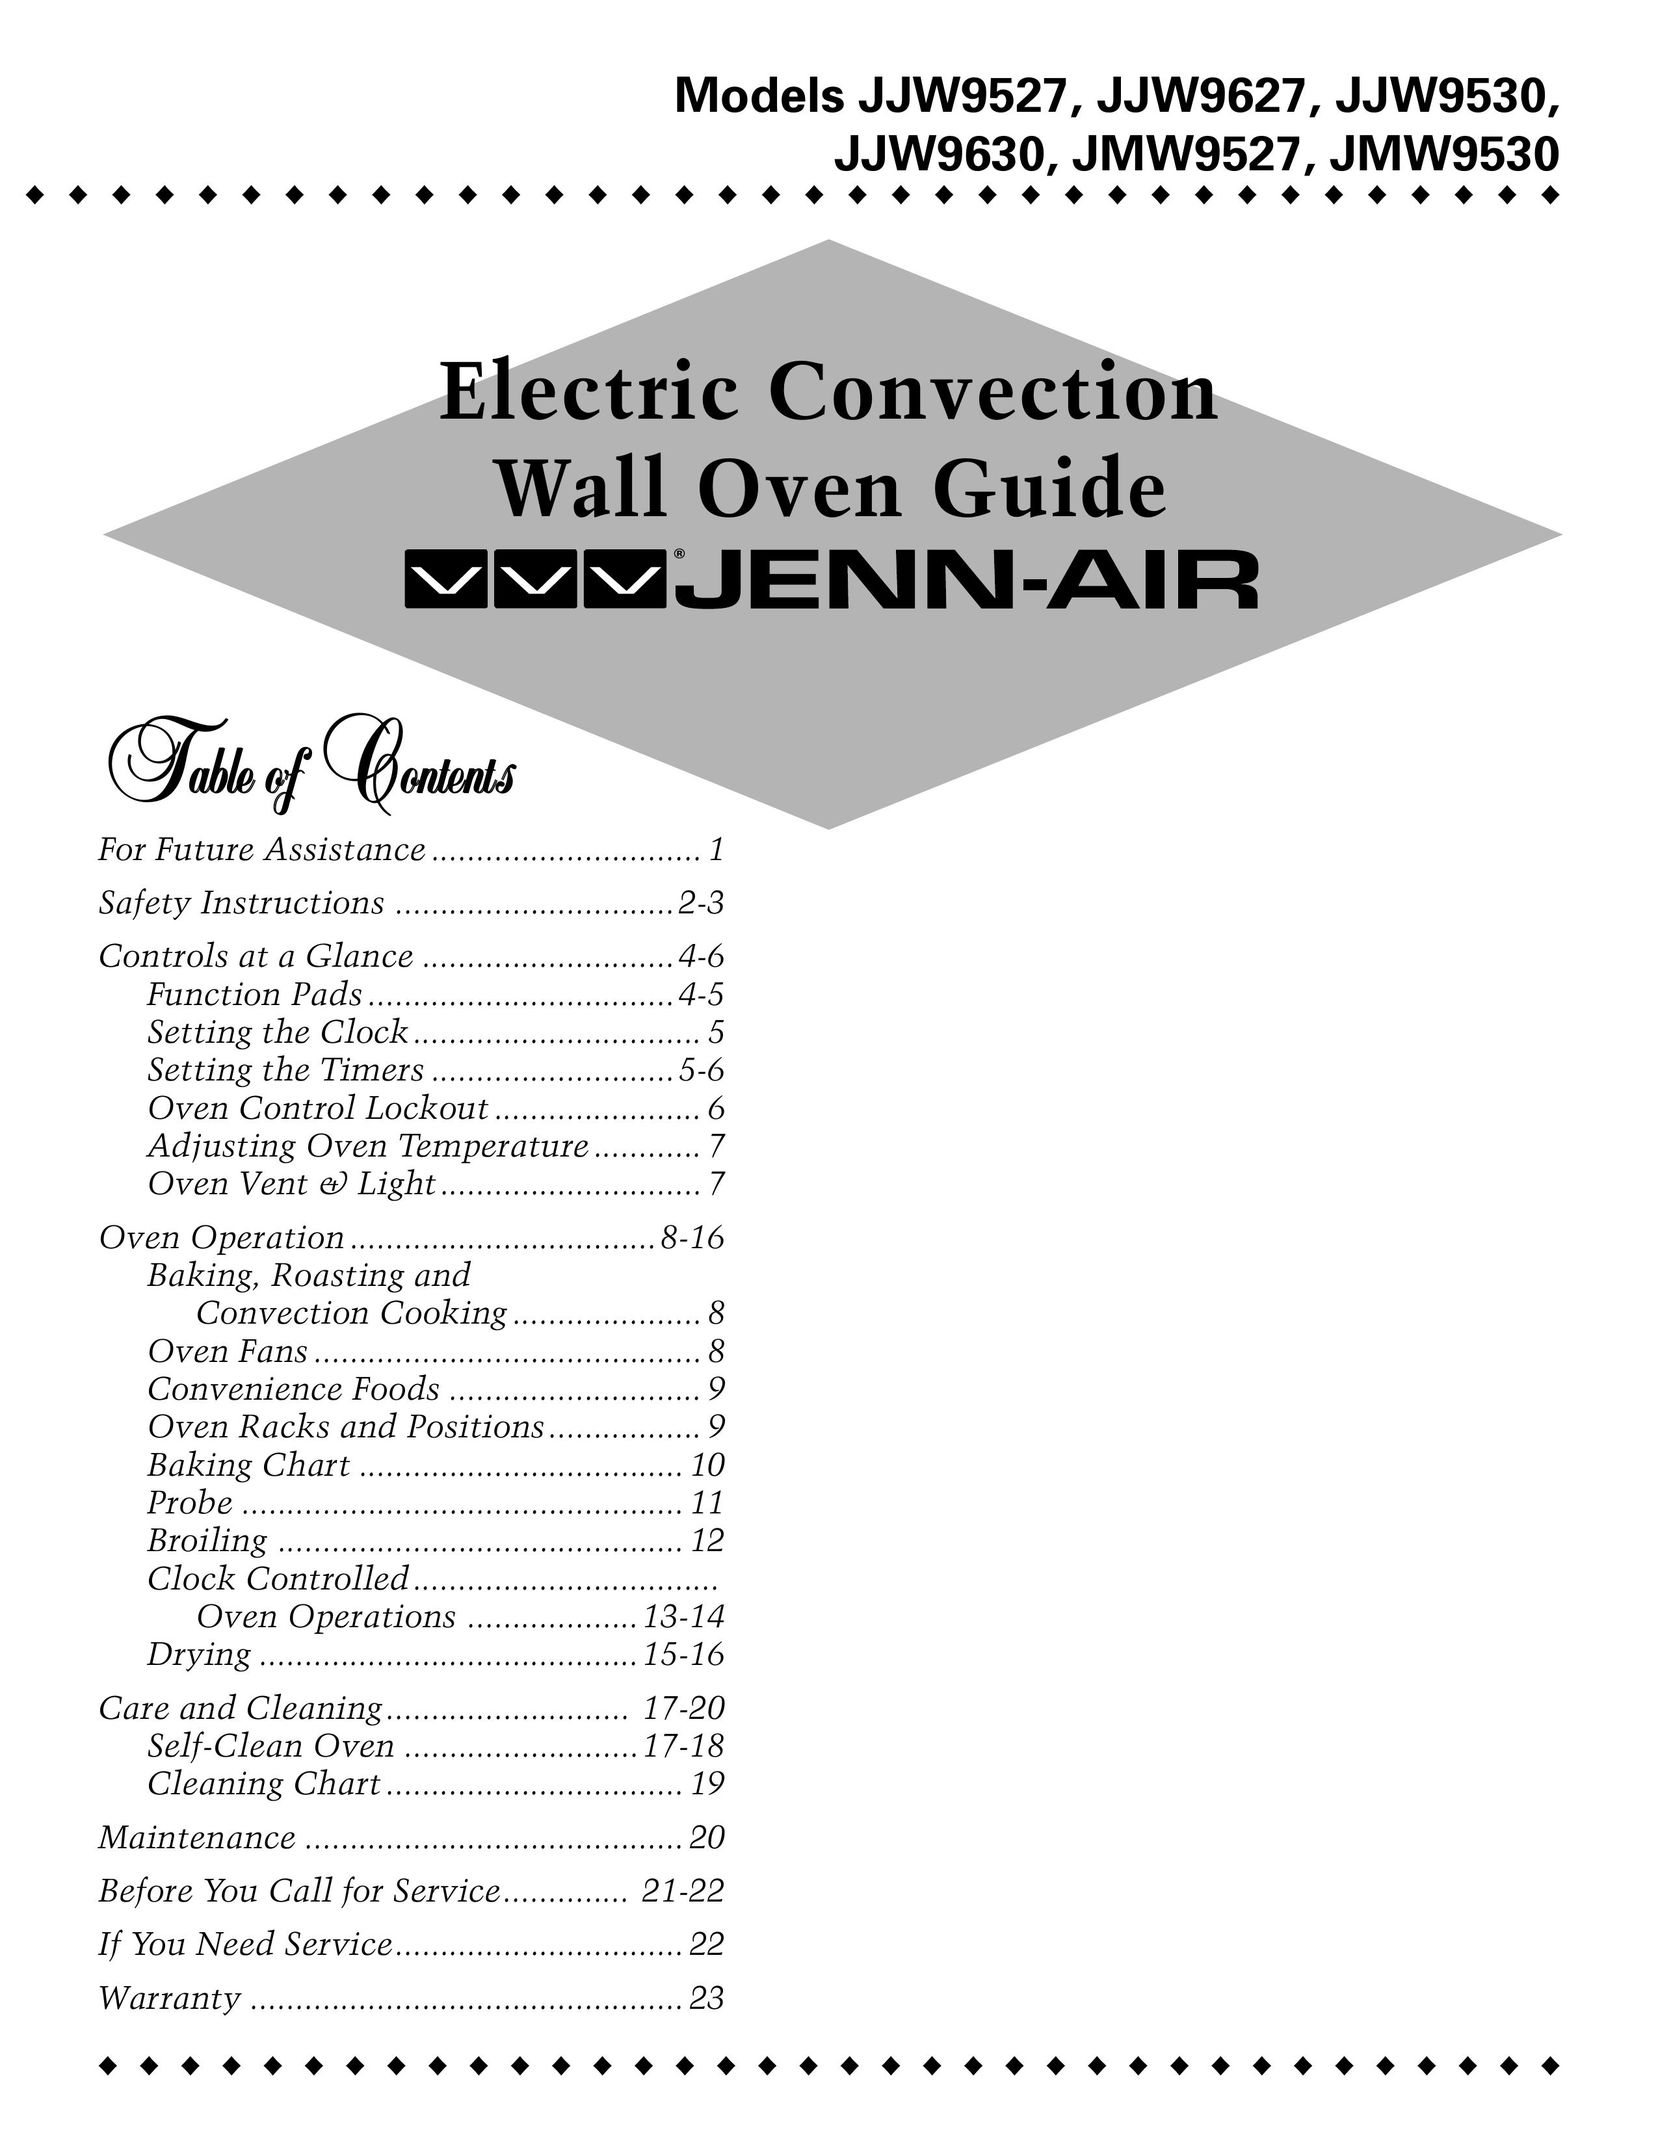 Jenn-Air JMW9530 Convection Oven User Manual